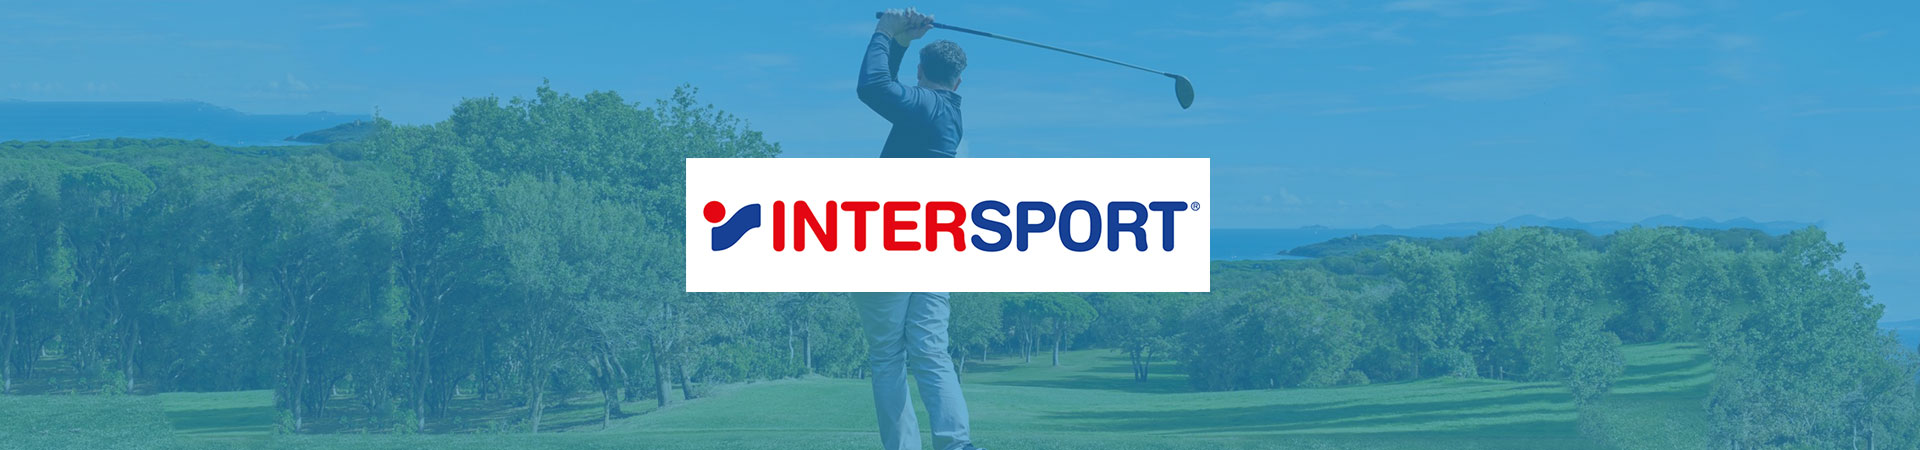 Banner of Inter Sport